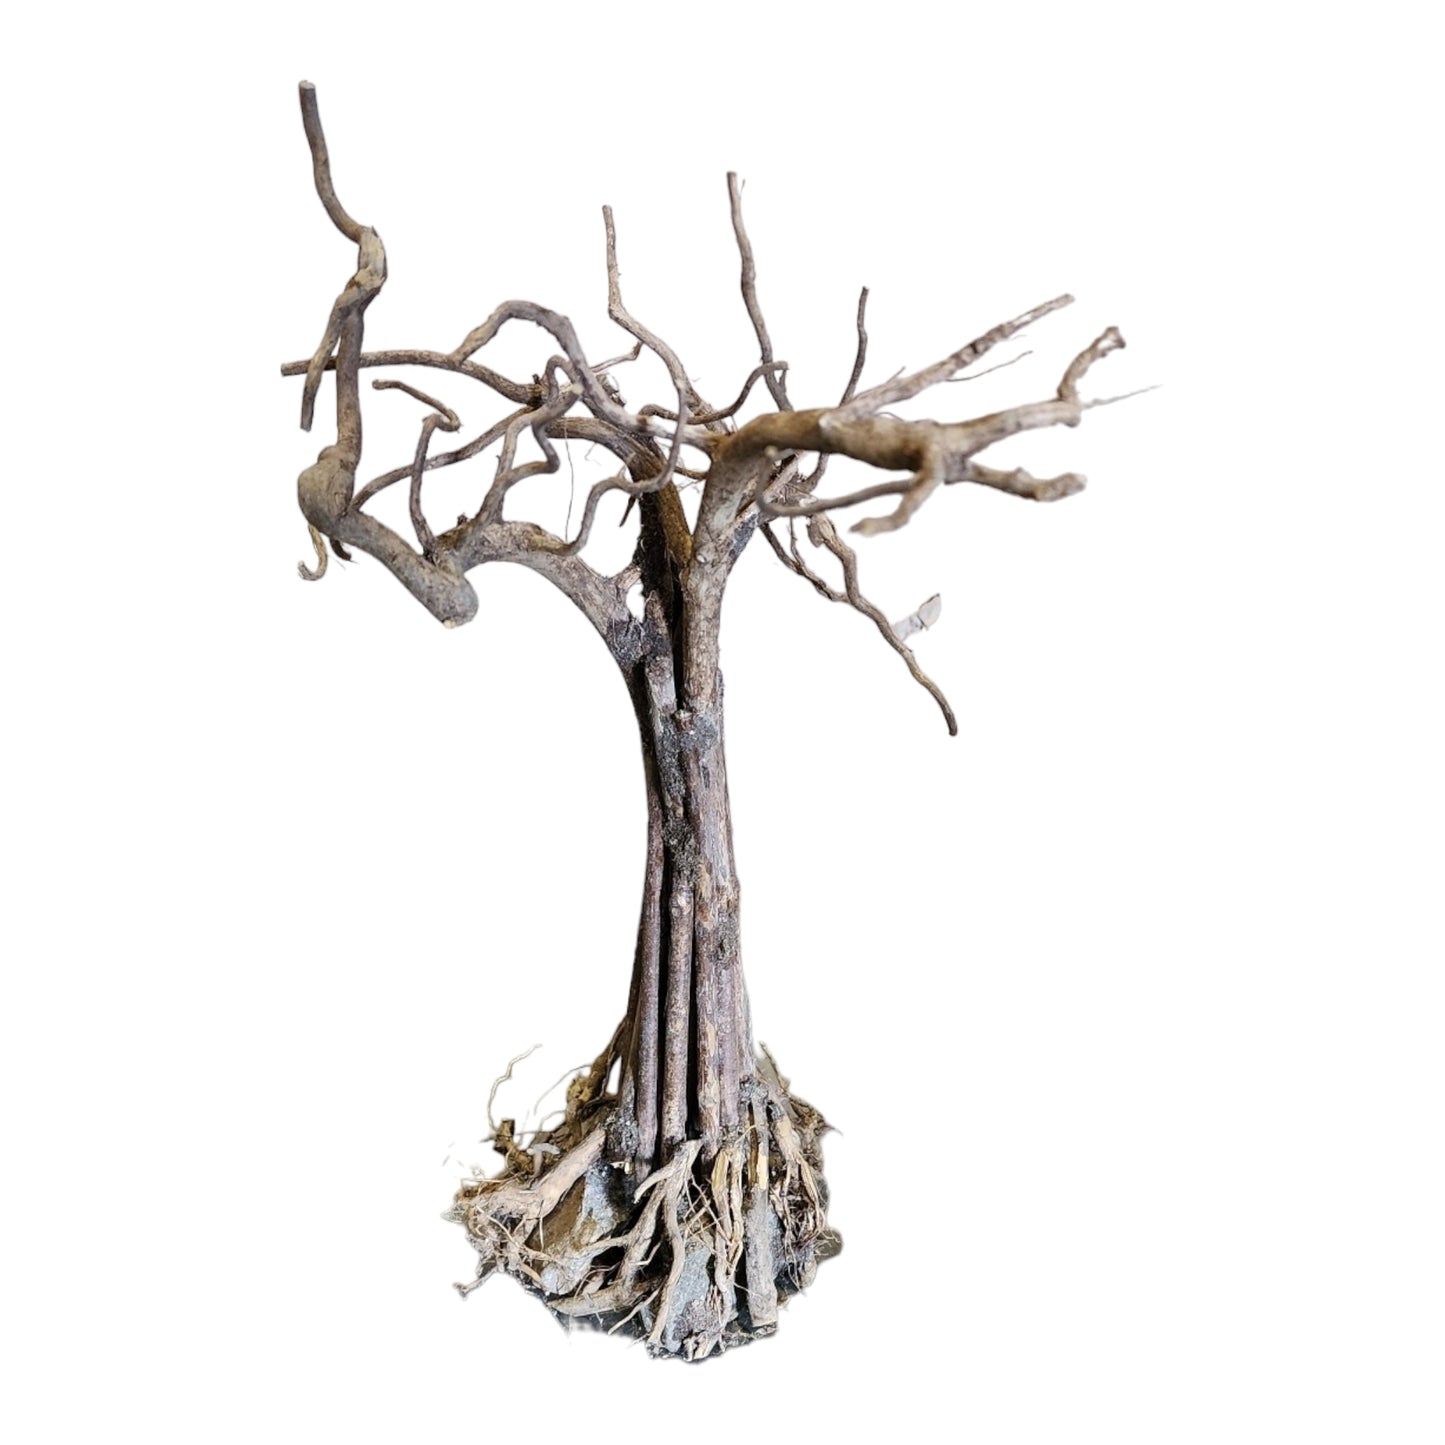 12 inch - Tree Patu DRIFTWOOD - 30-35cm - Indonesia - NEW923 - #9J